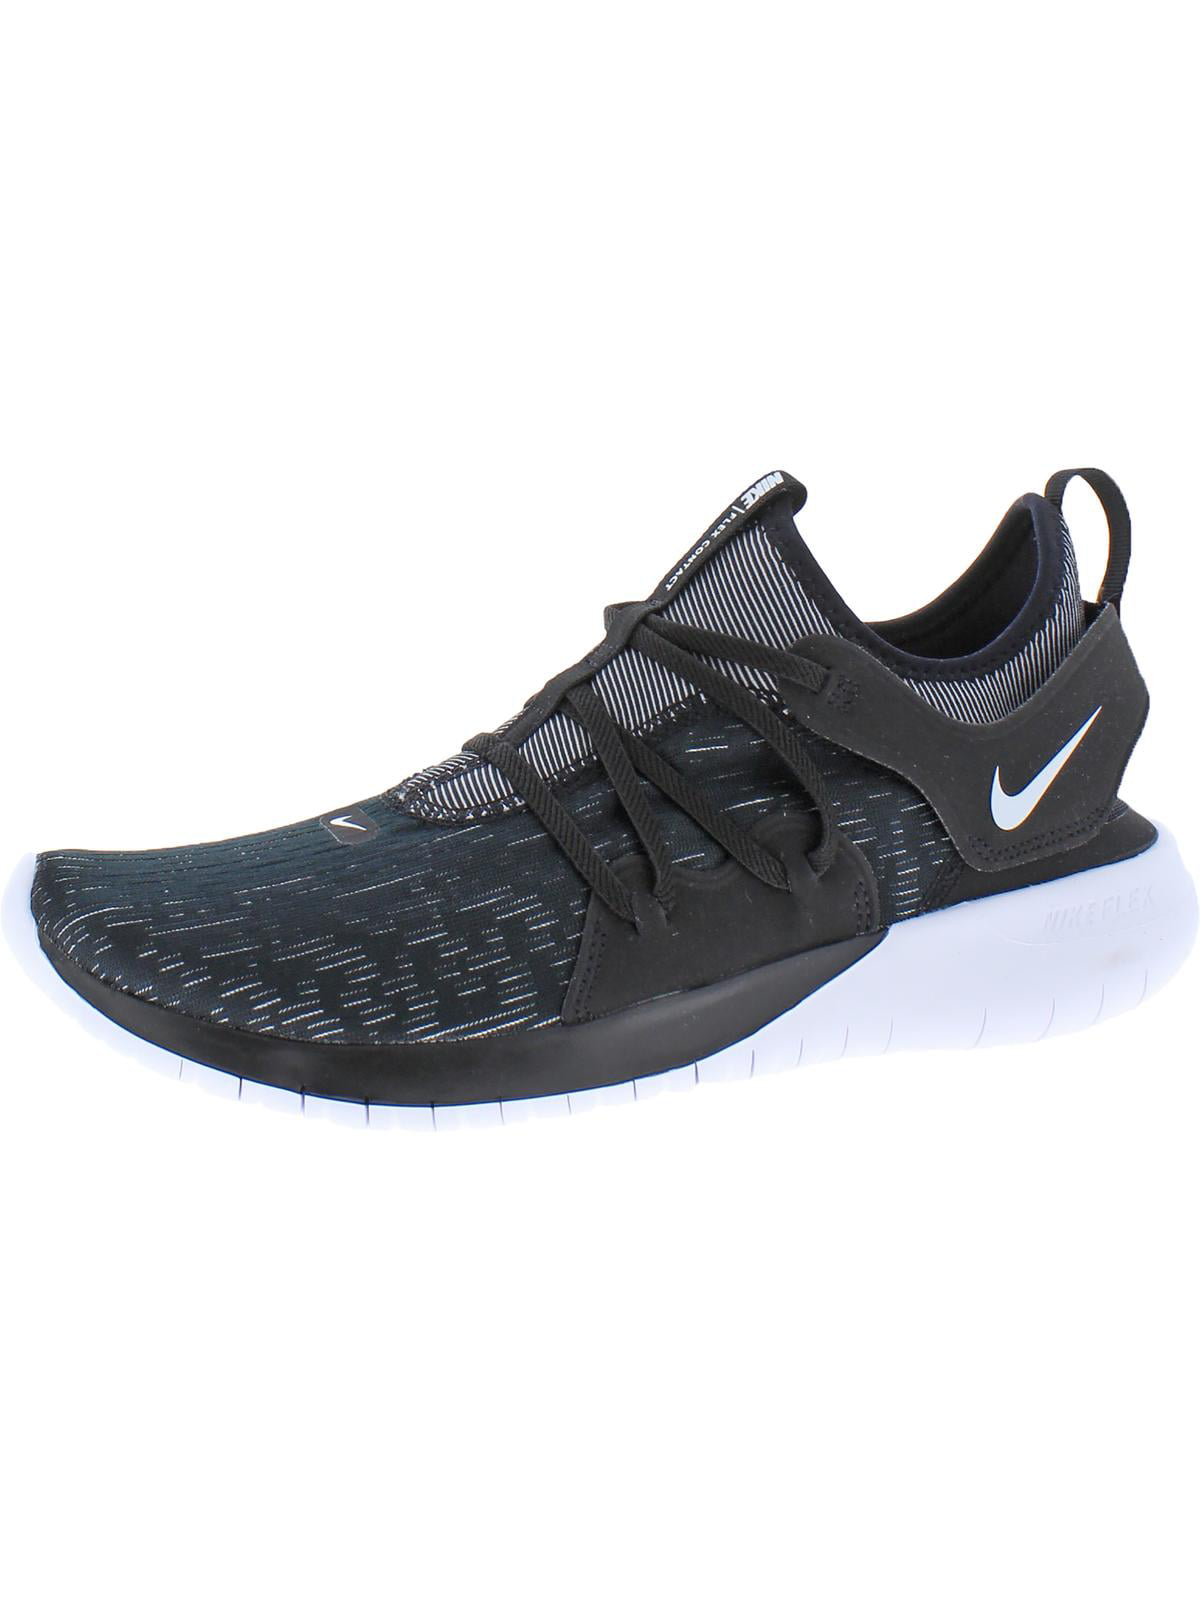 Nike Mens Flex Contact 3 Knit Fitness Running Shoes - Walmart.com